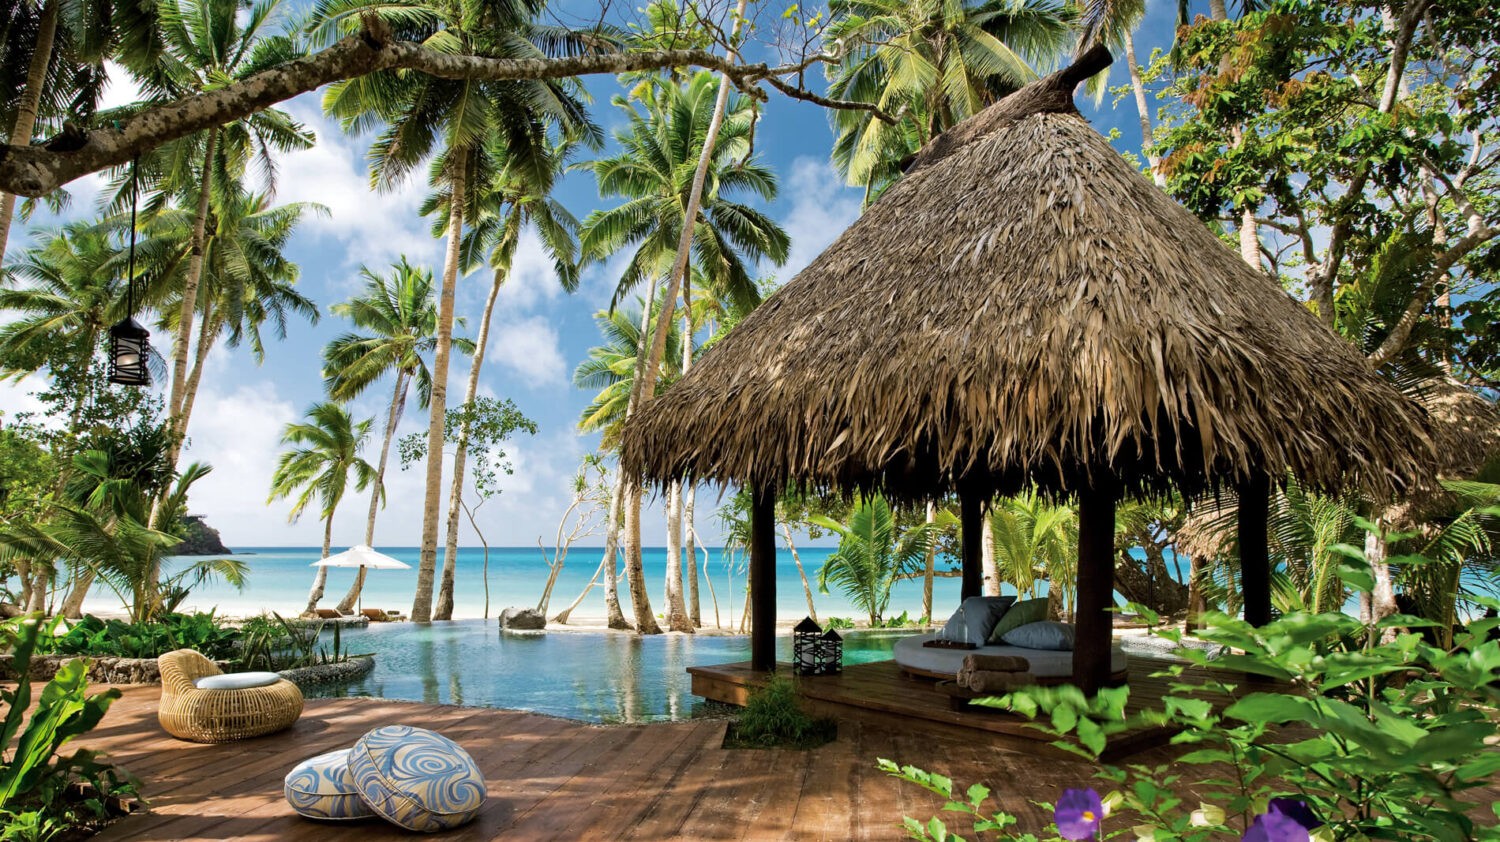 COMO_Laucala_Island_Seagrass Residence- View of pool and cabana